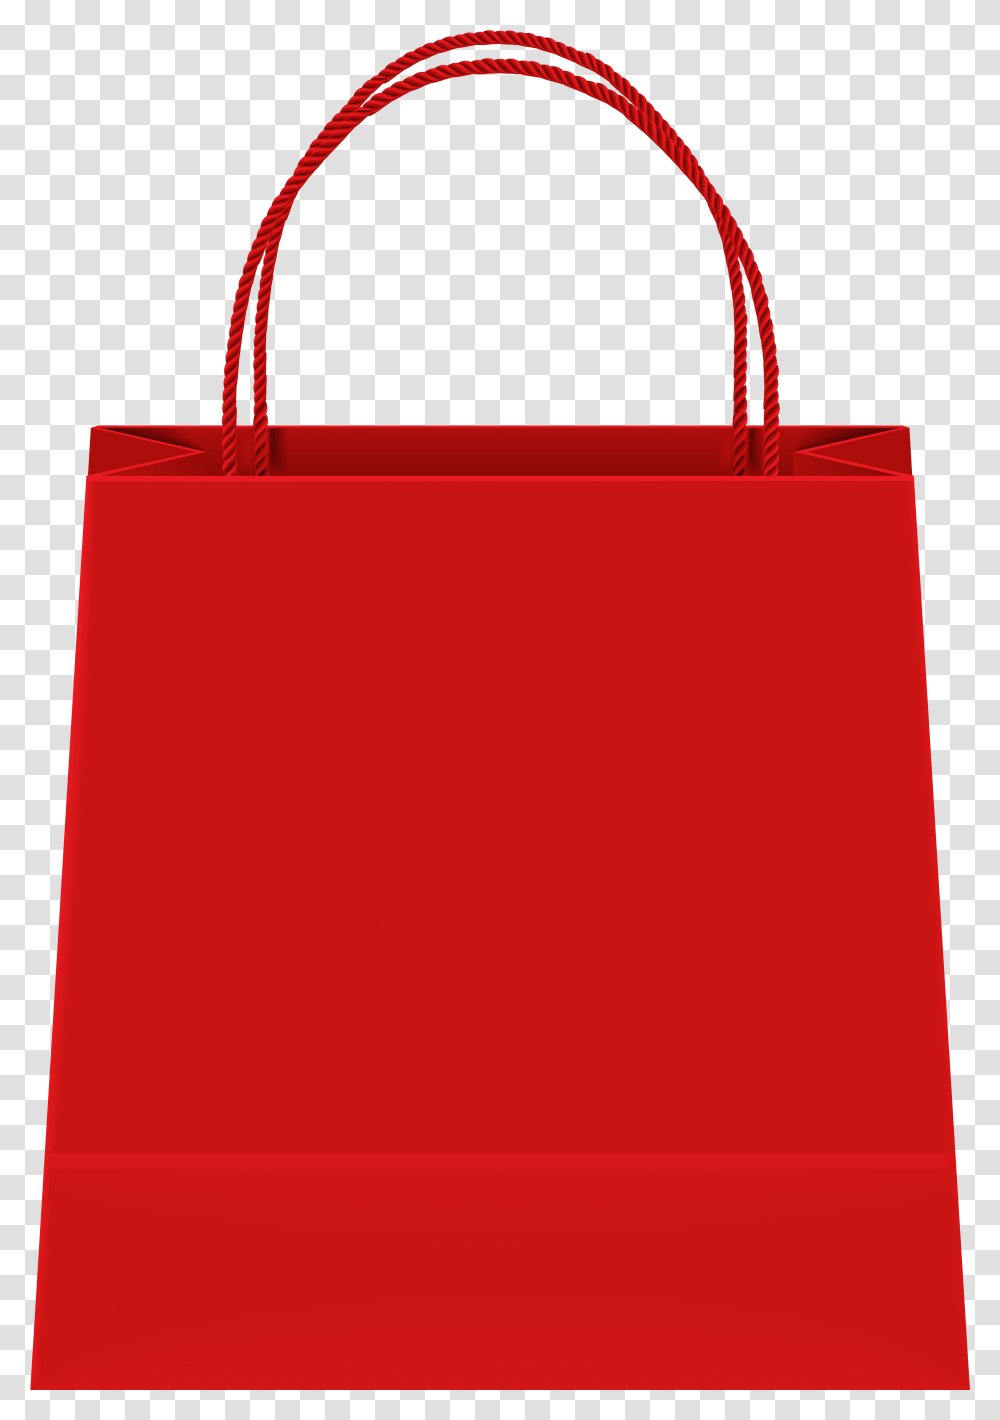 Bag Clipart Gift Gift Bag Clipart, Shopping Bag, Tote Bag Transparent Png